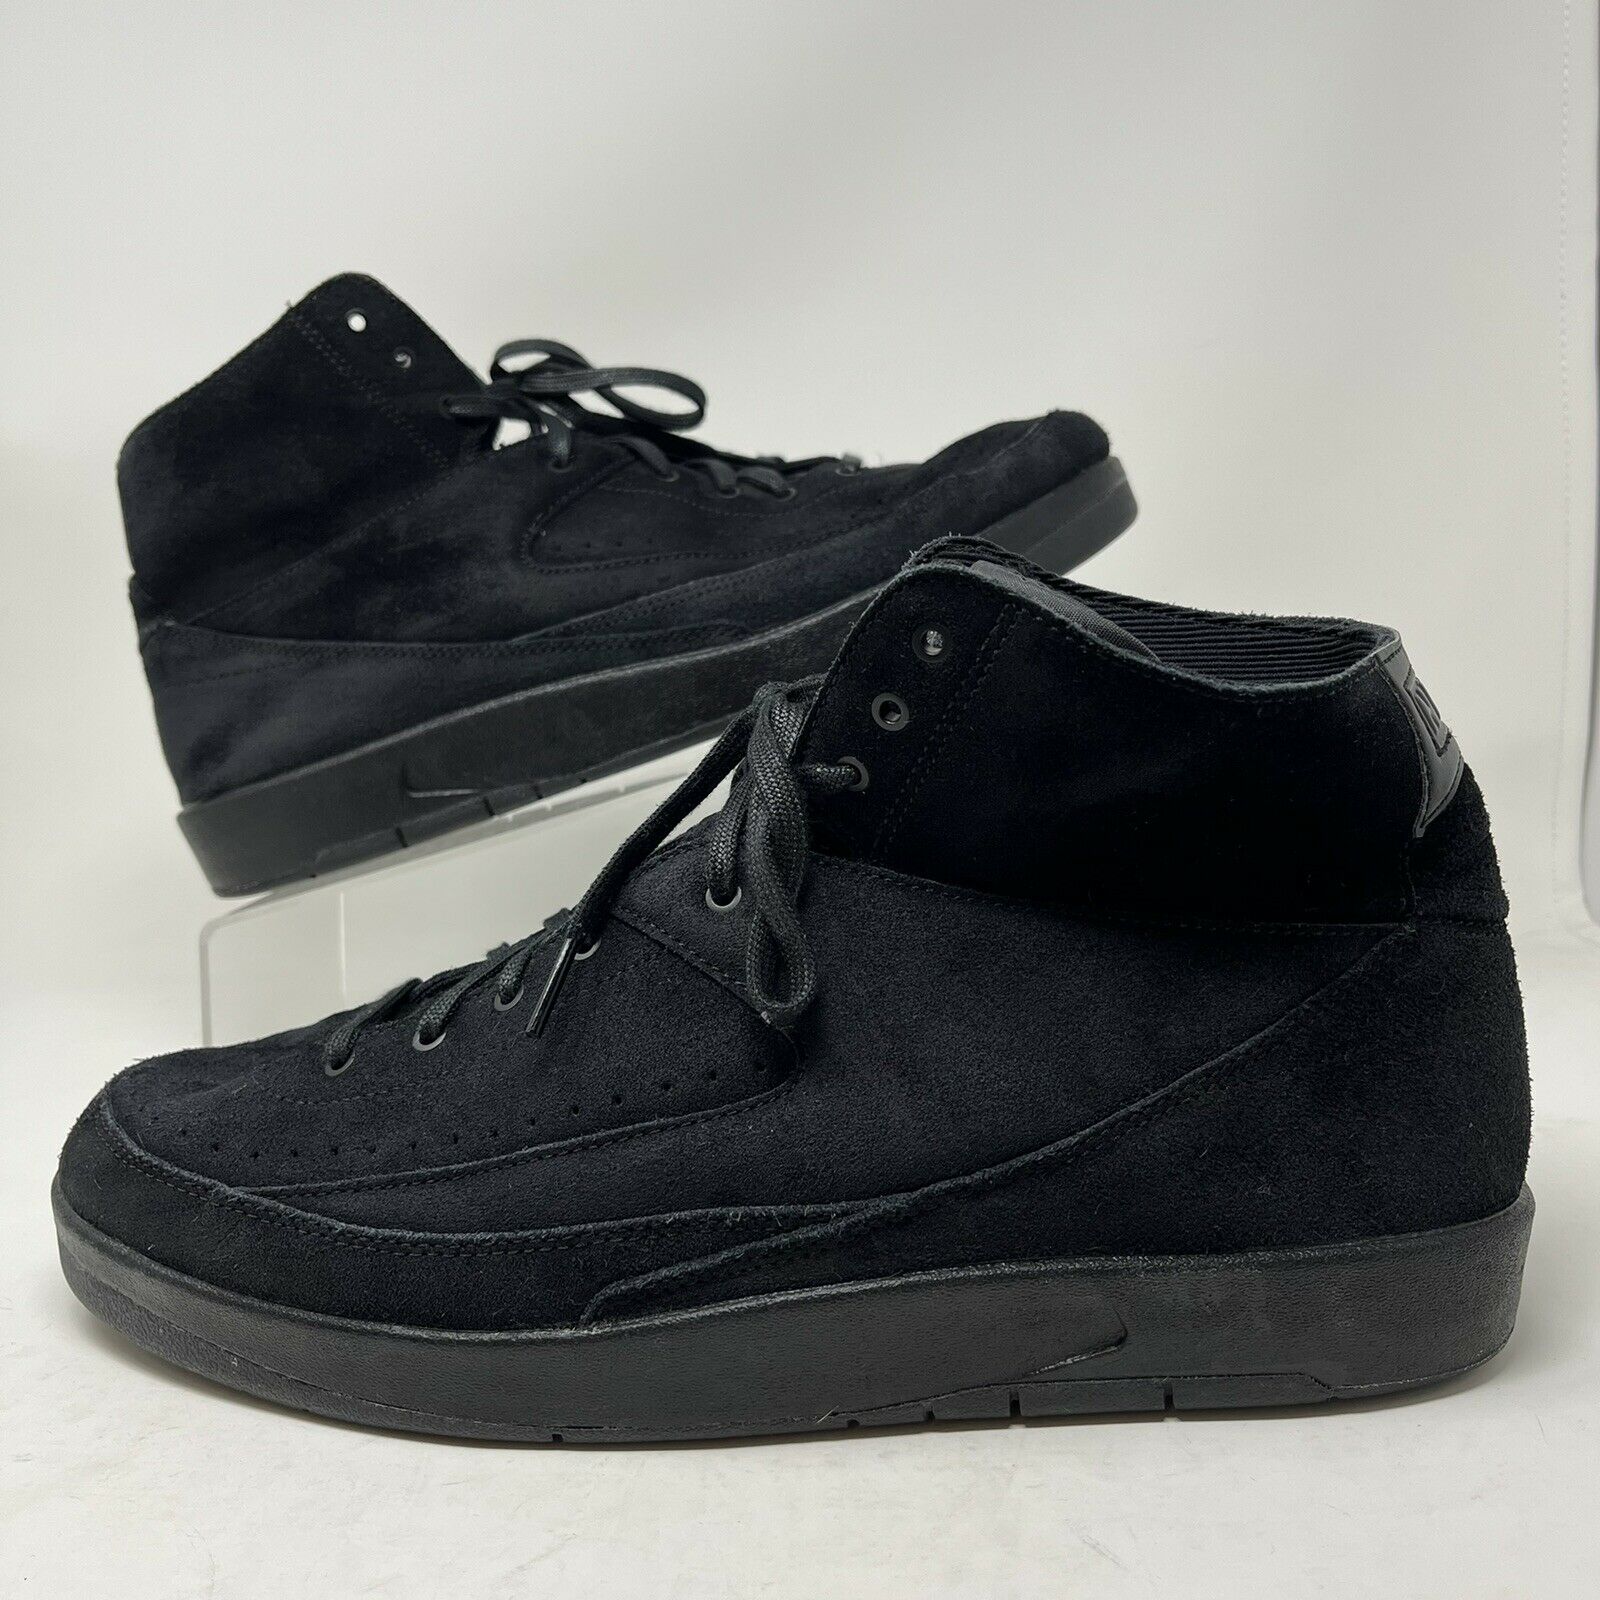 NIKE 2017 Air Jordan 2 Retro Decon Black Athletic Shoes 897521-010 Size 13